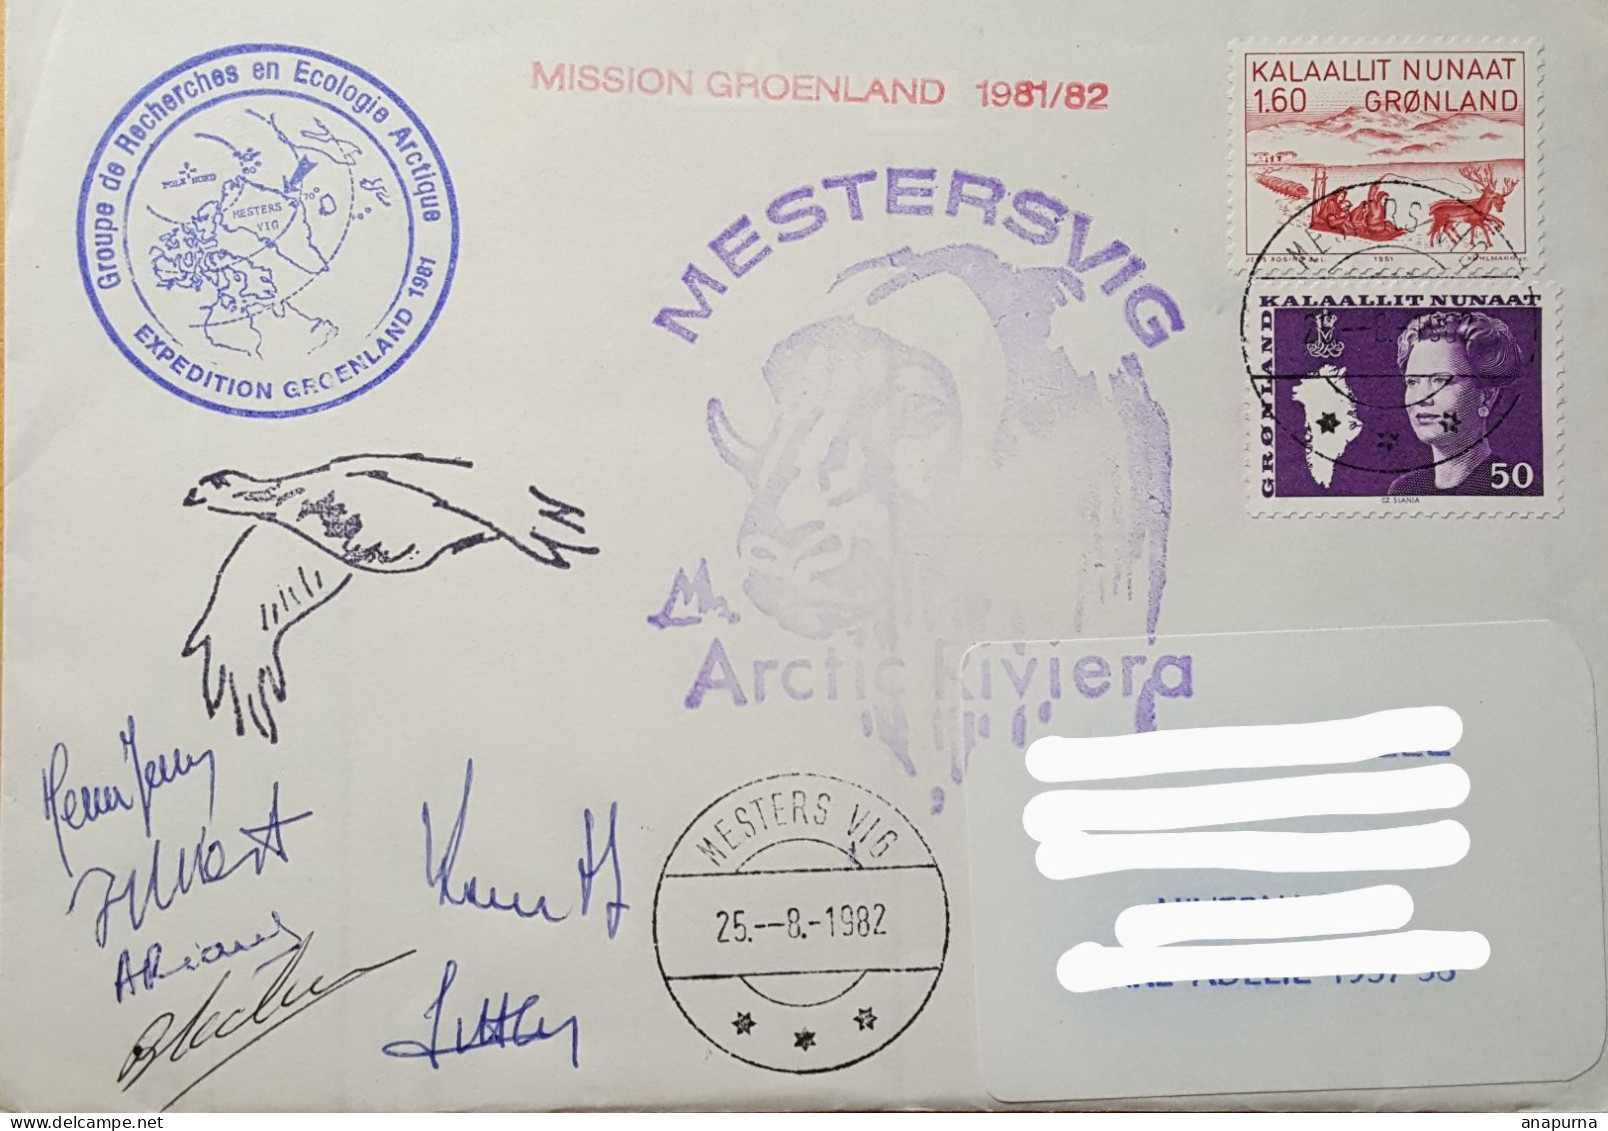 Pli Groenland. Expédition Du Groupe Recherche Ecologie Arctique 81/82. Mestersvig Arctic Riviera. 6 Signatures. - Onderzoeksprogramma's